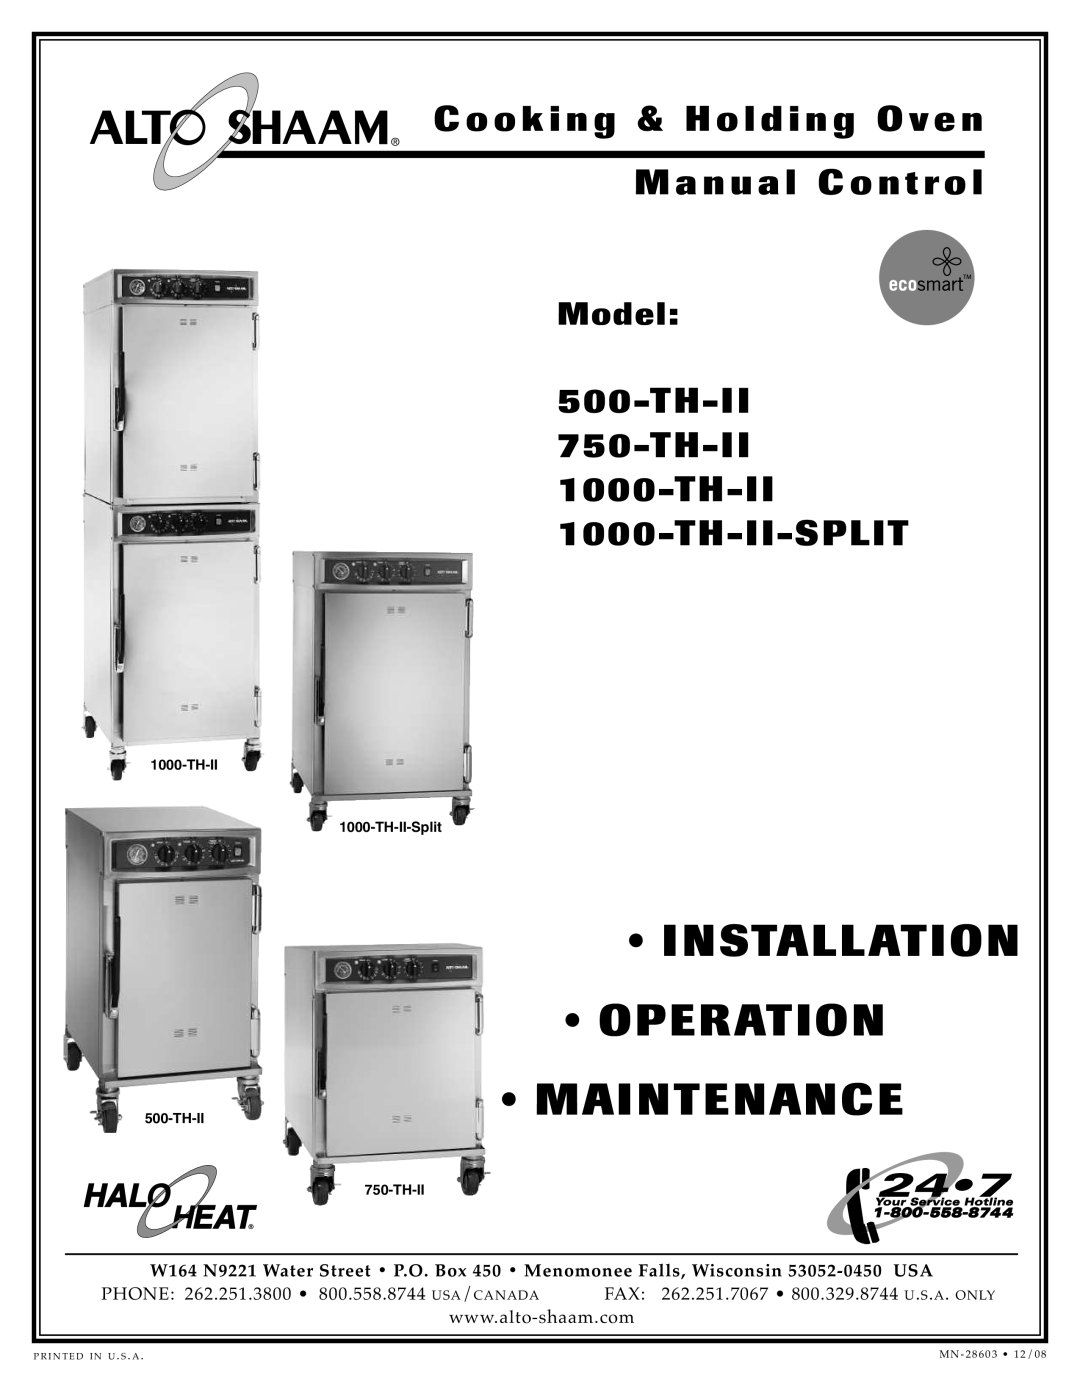 Alto-Shaam 1000-TH-II-SPLIT manual Inst Allat Ion, Oper Ation, Mainte Nance, Coo ki ng & Holding, Oven, Ma nual, Control 